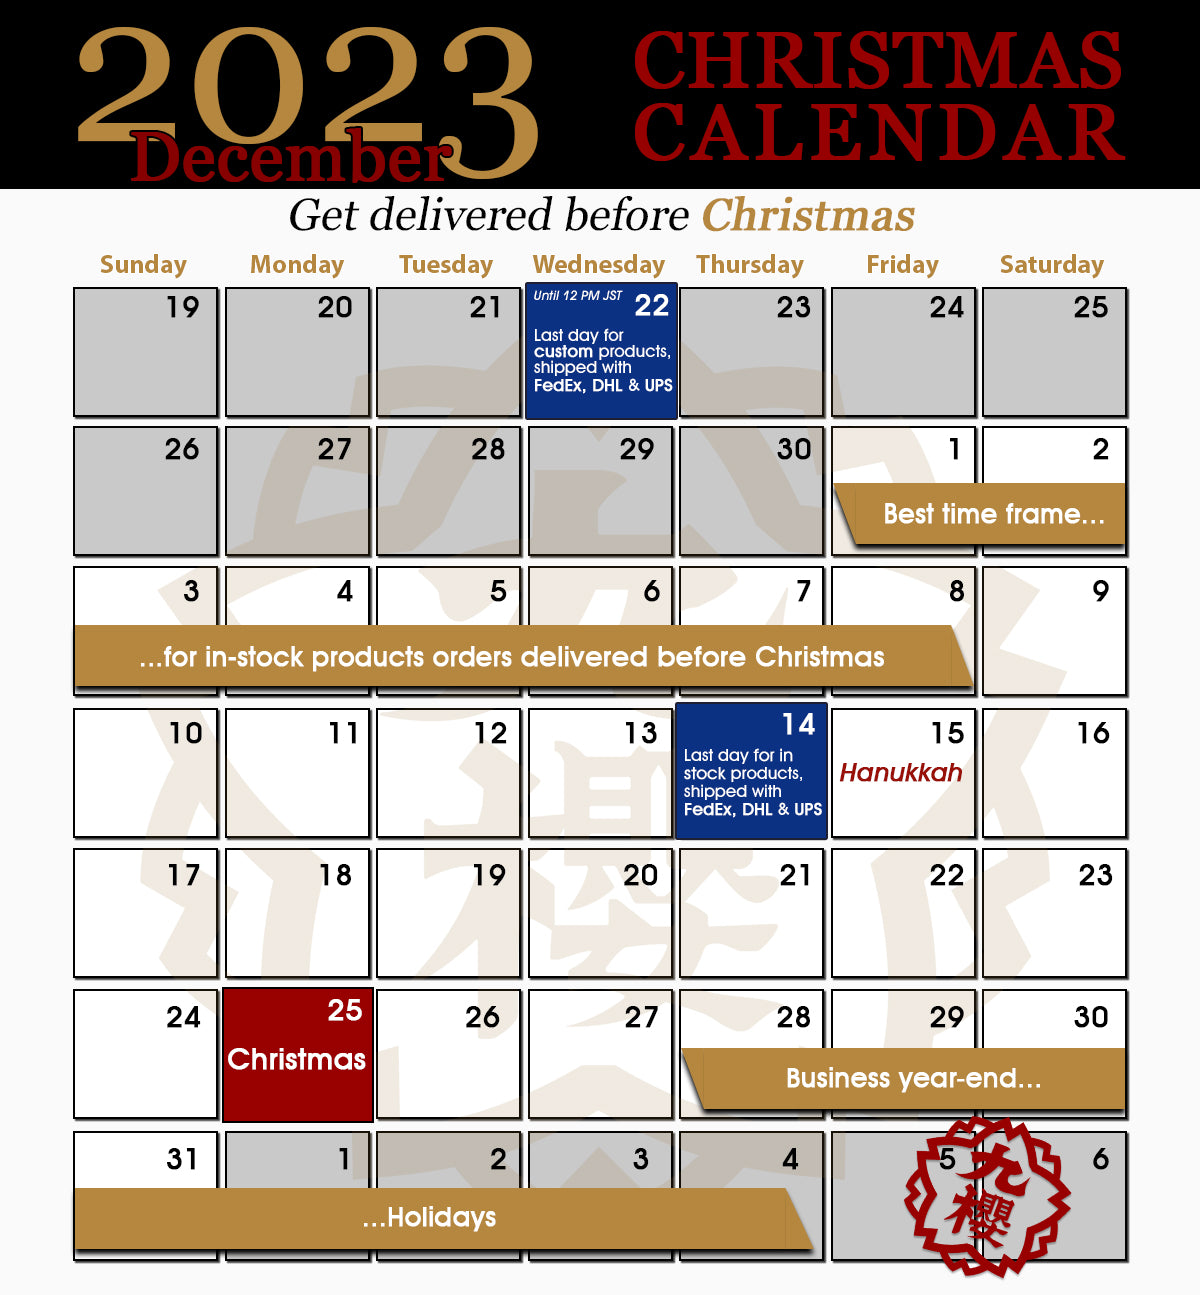 Christmas Calendar 2022